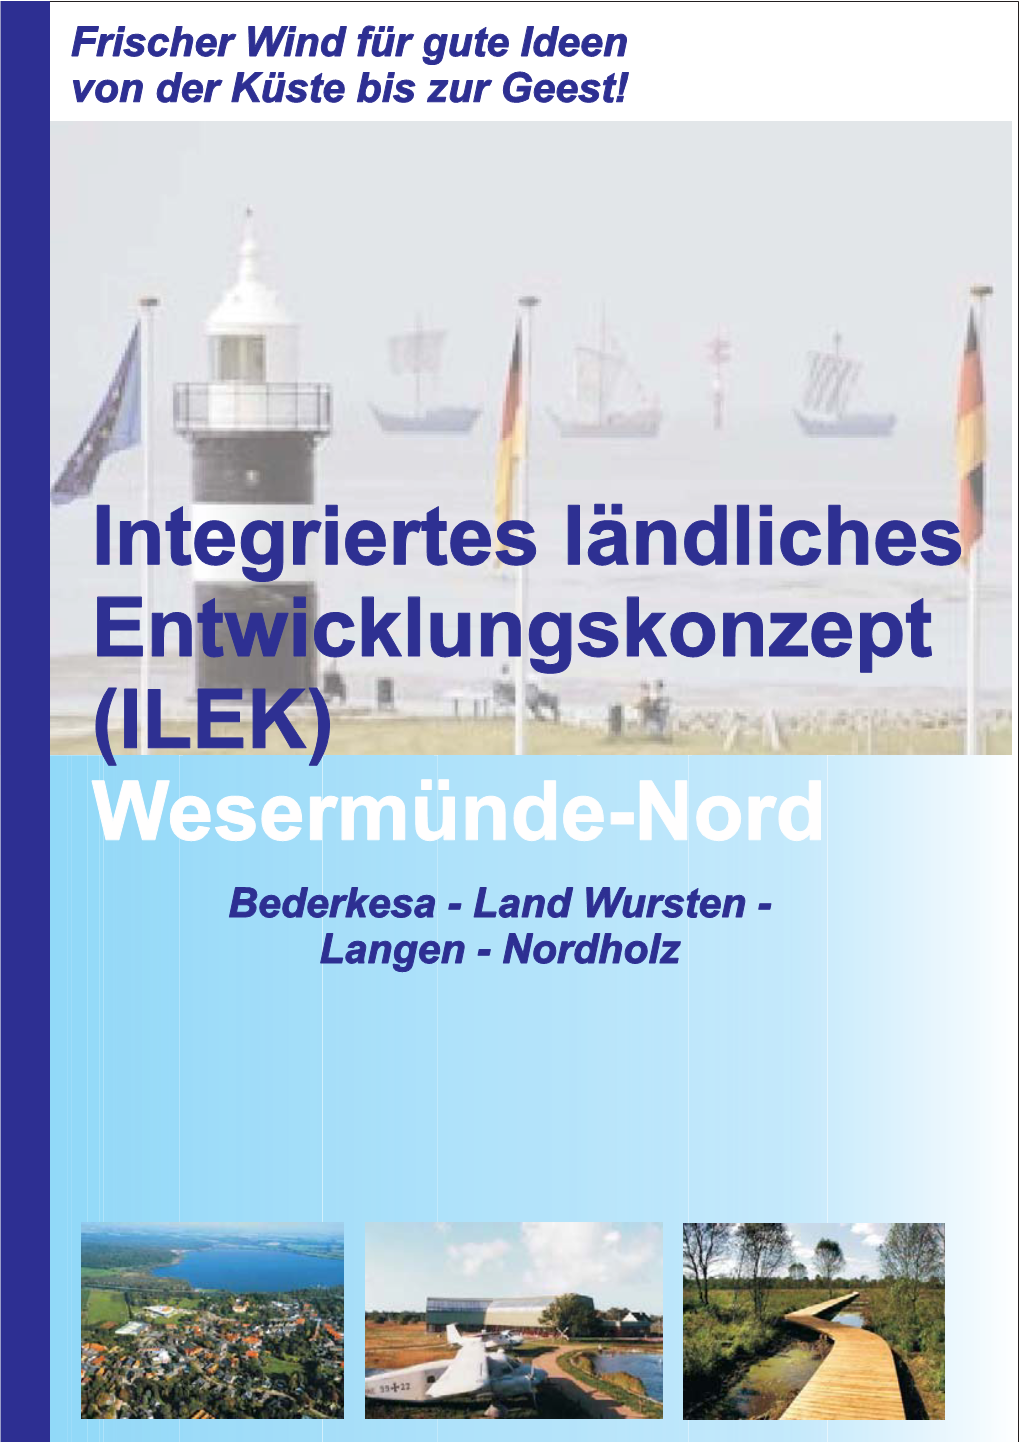 ILEK) Wesermünde-Nord Bederkesa - Land Wursten - Langen - Nordholz